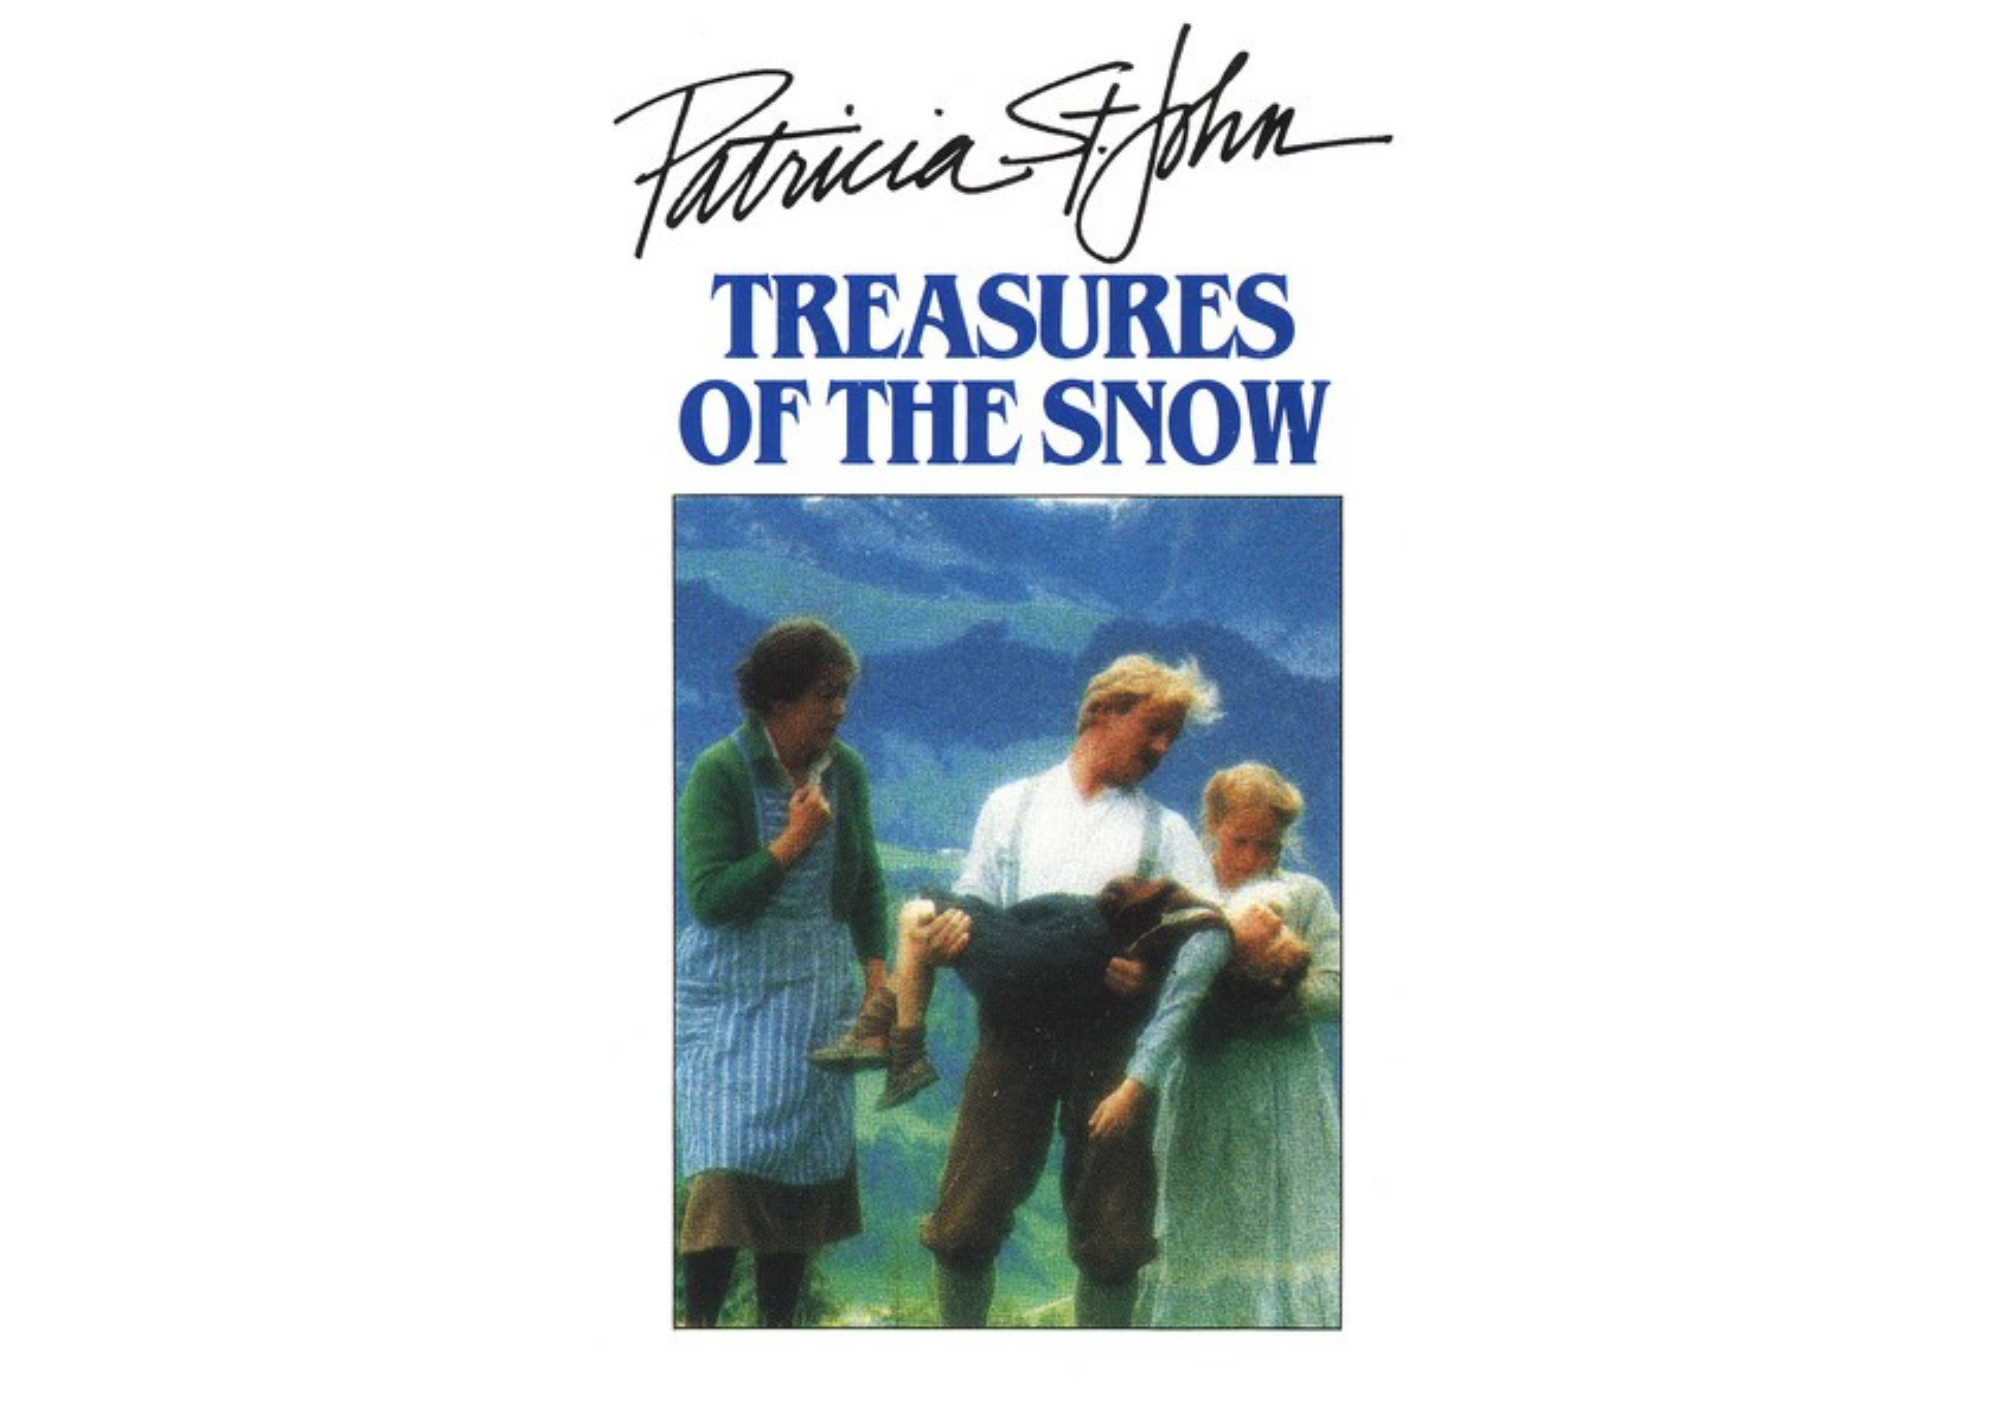 Treasures of the snow